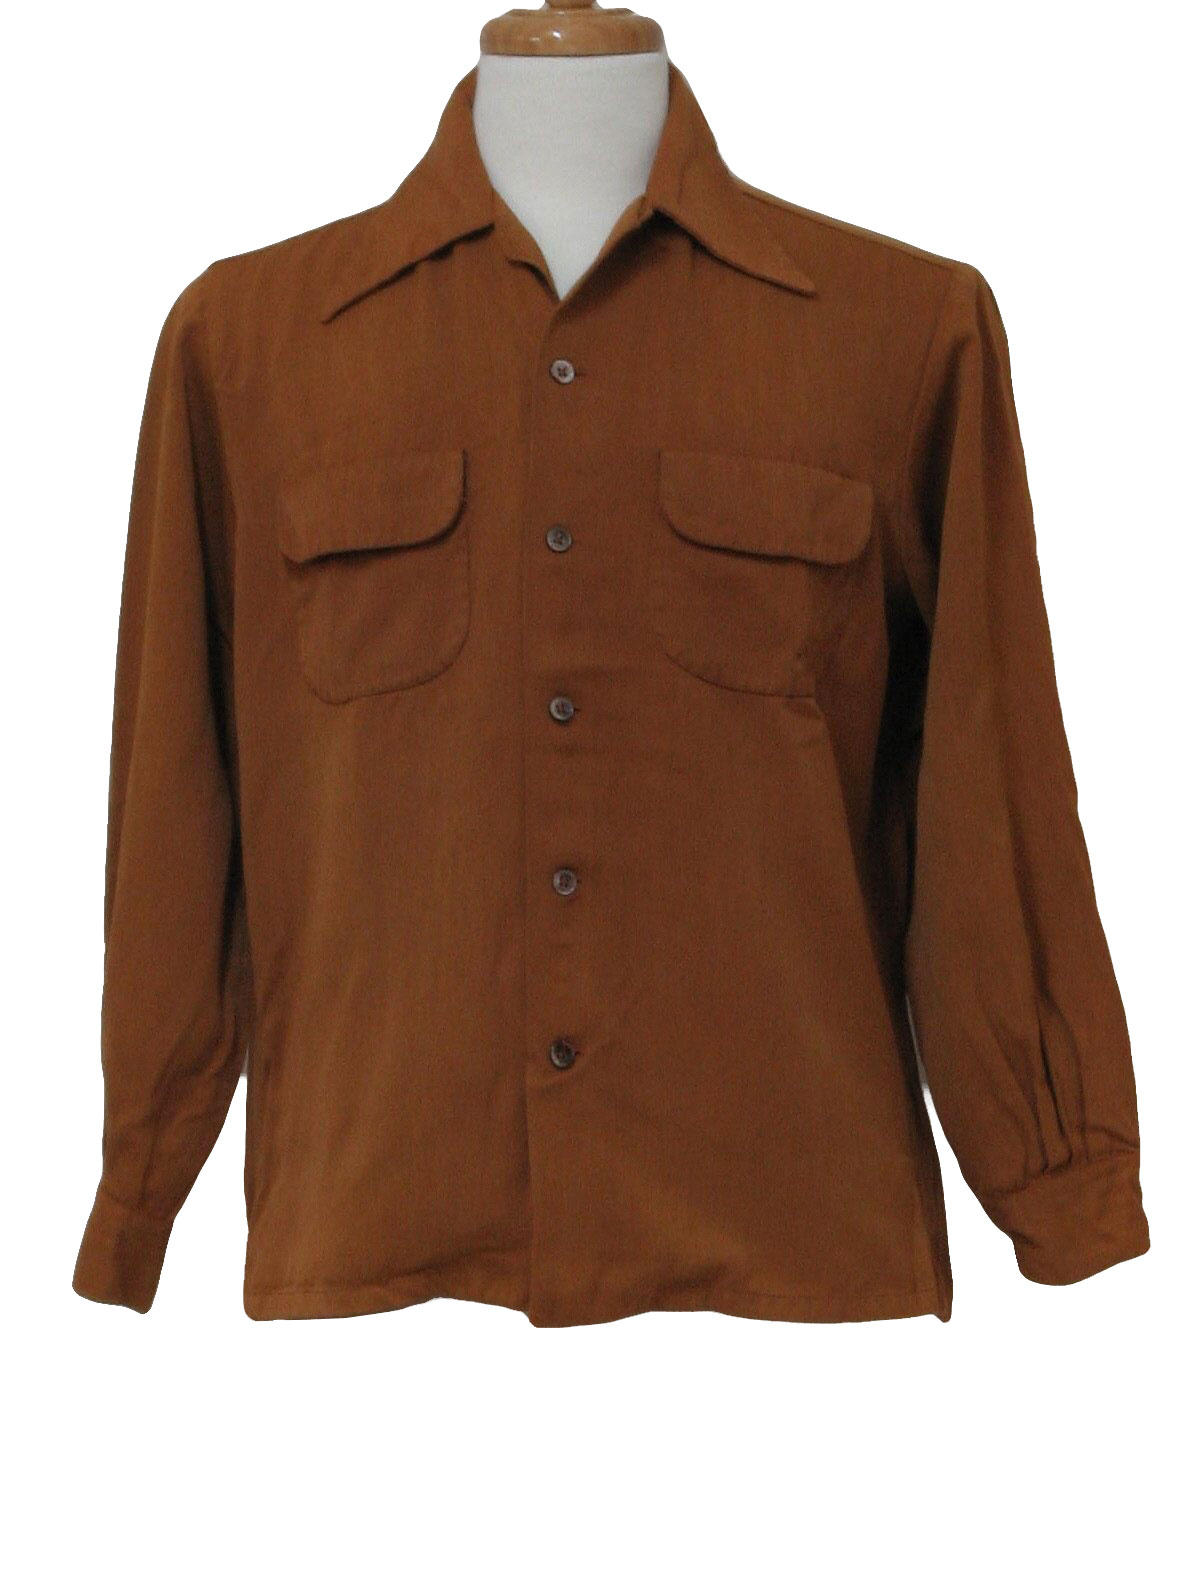 1940's Retro Gabardine Shirt: Late 40s - California Casualaire ...